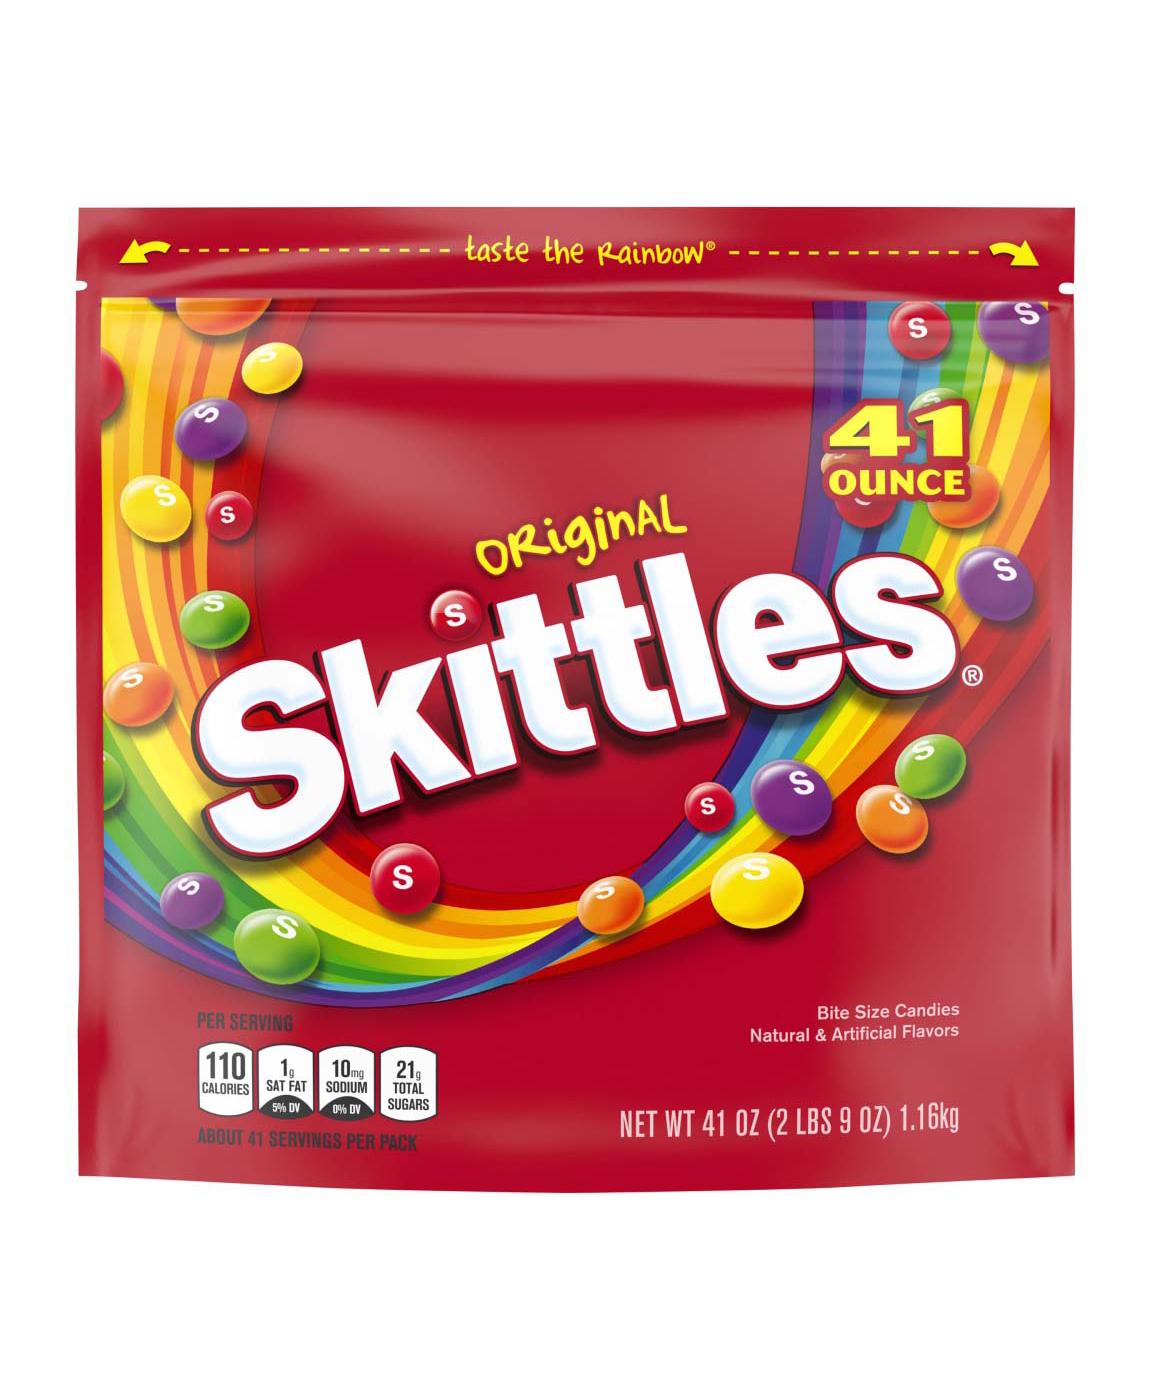 Skittles Original Candy Bag; image 1 of 7